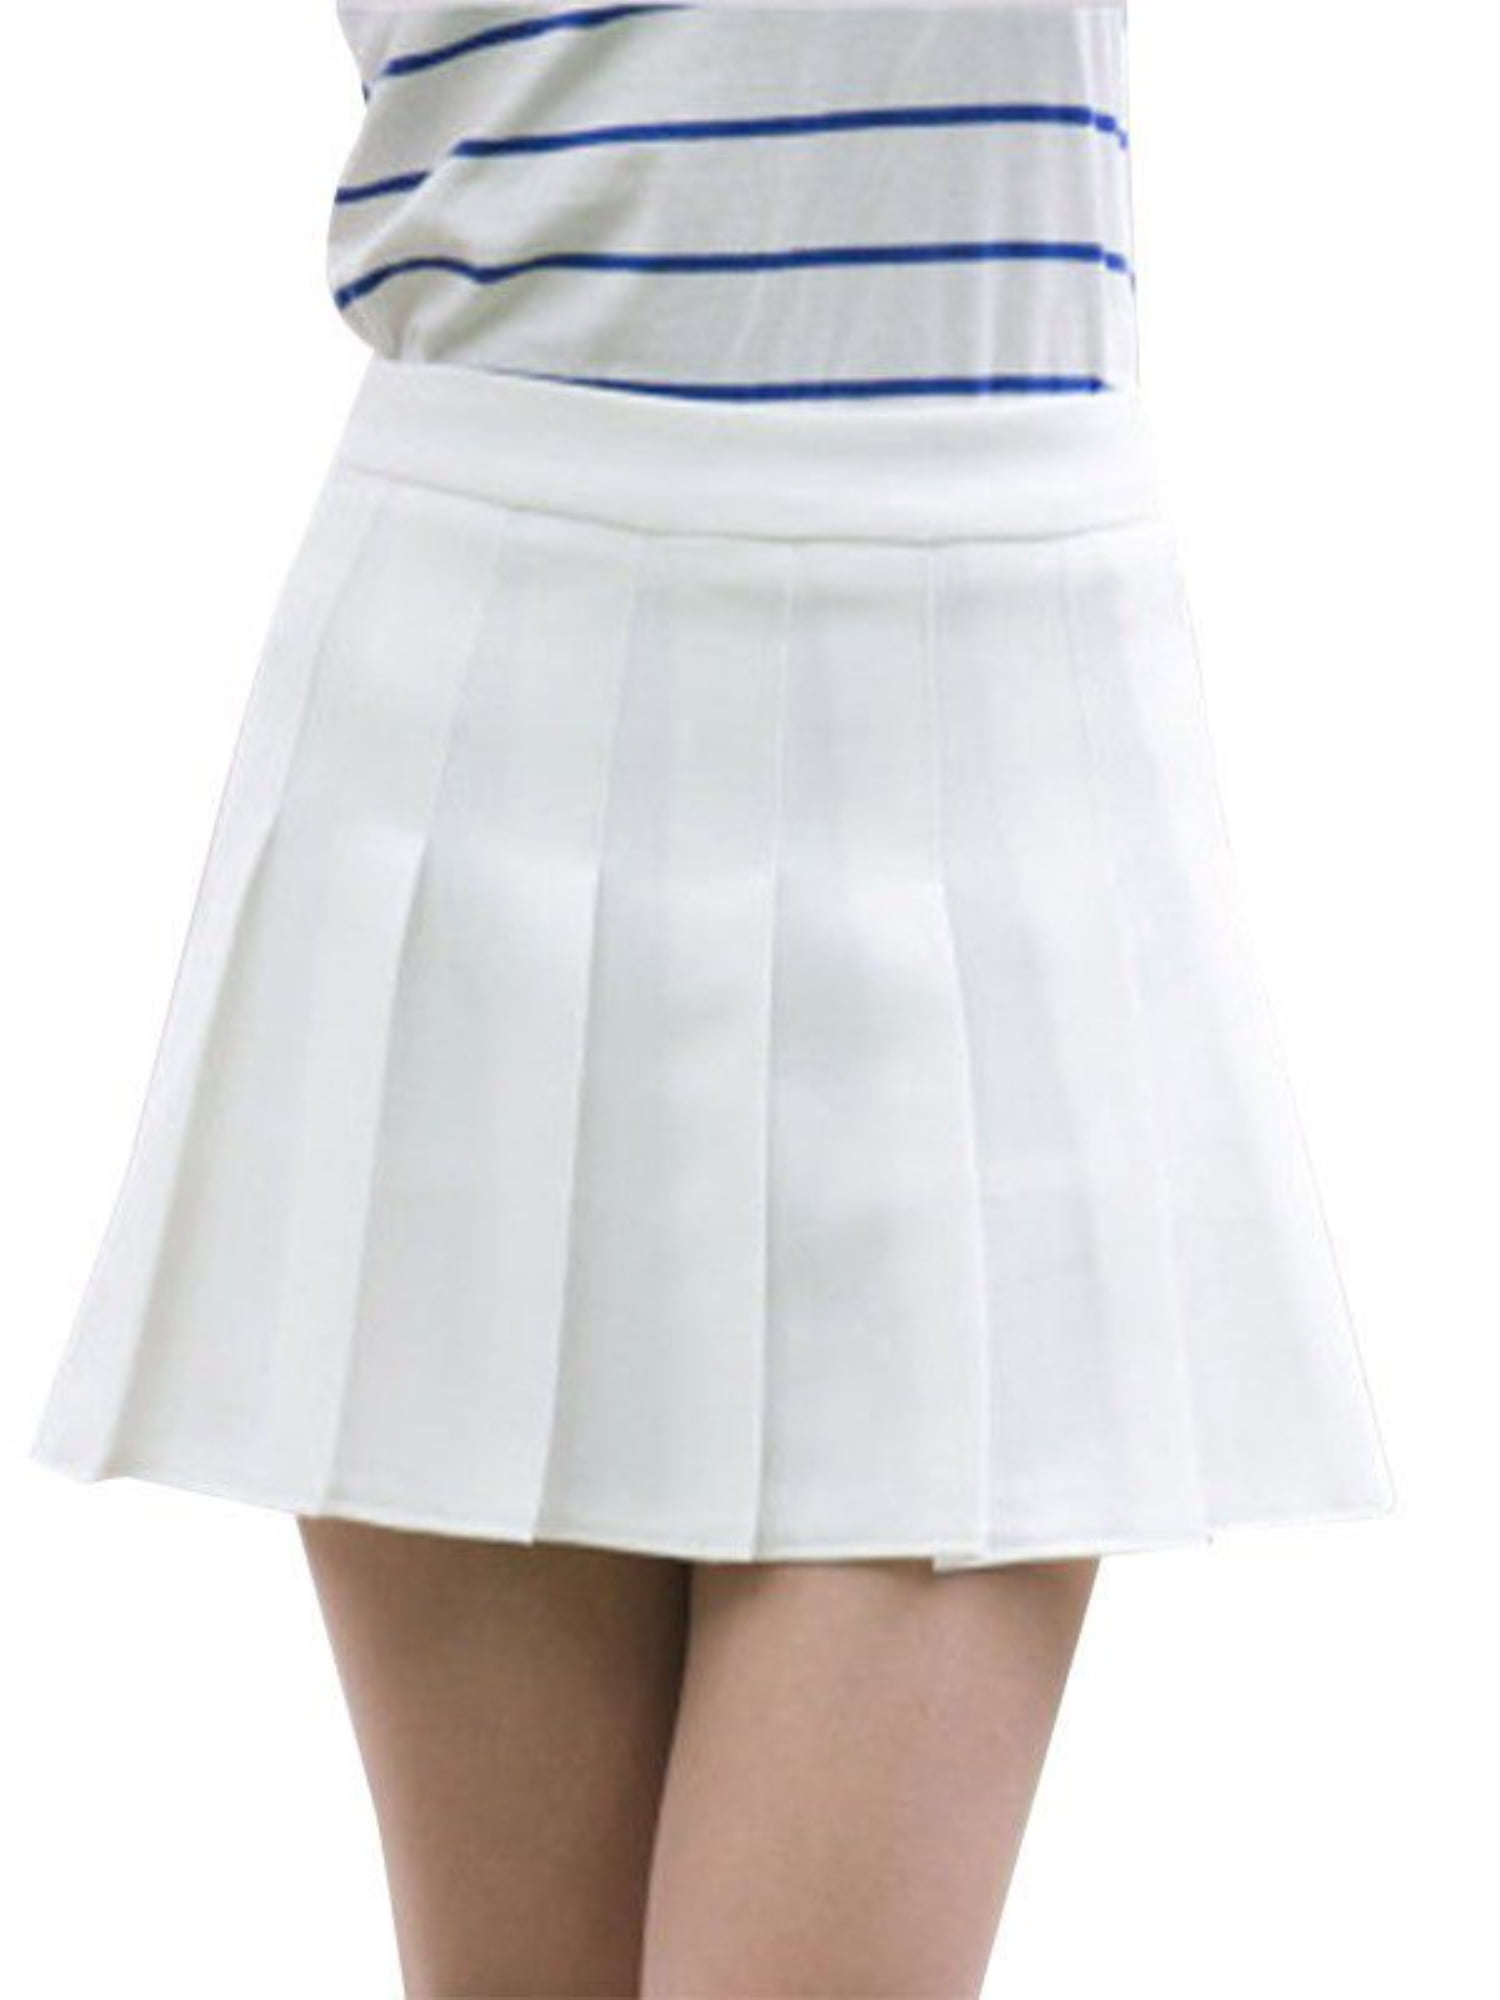 Womens Skirts Fashion Classic A-Line Pleated Mini Skater Skirt for Teen Girls Casual Basic Solid High Waist Flared Short Tennis Skirt School Uniform Skirt Above Knee Skirt